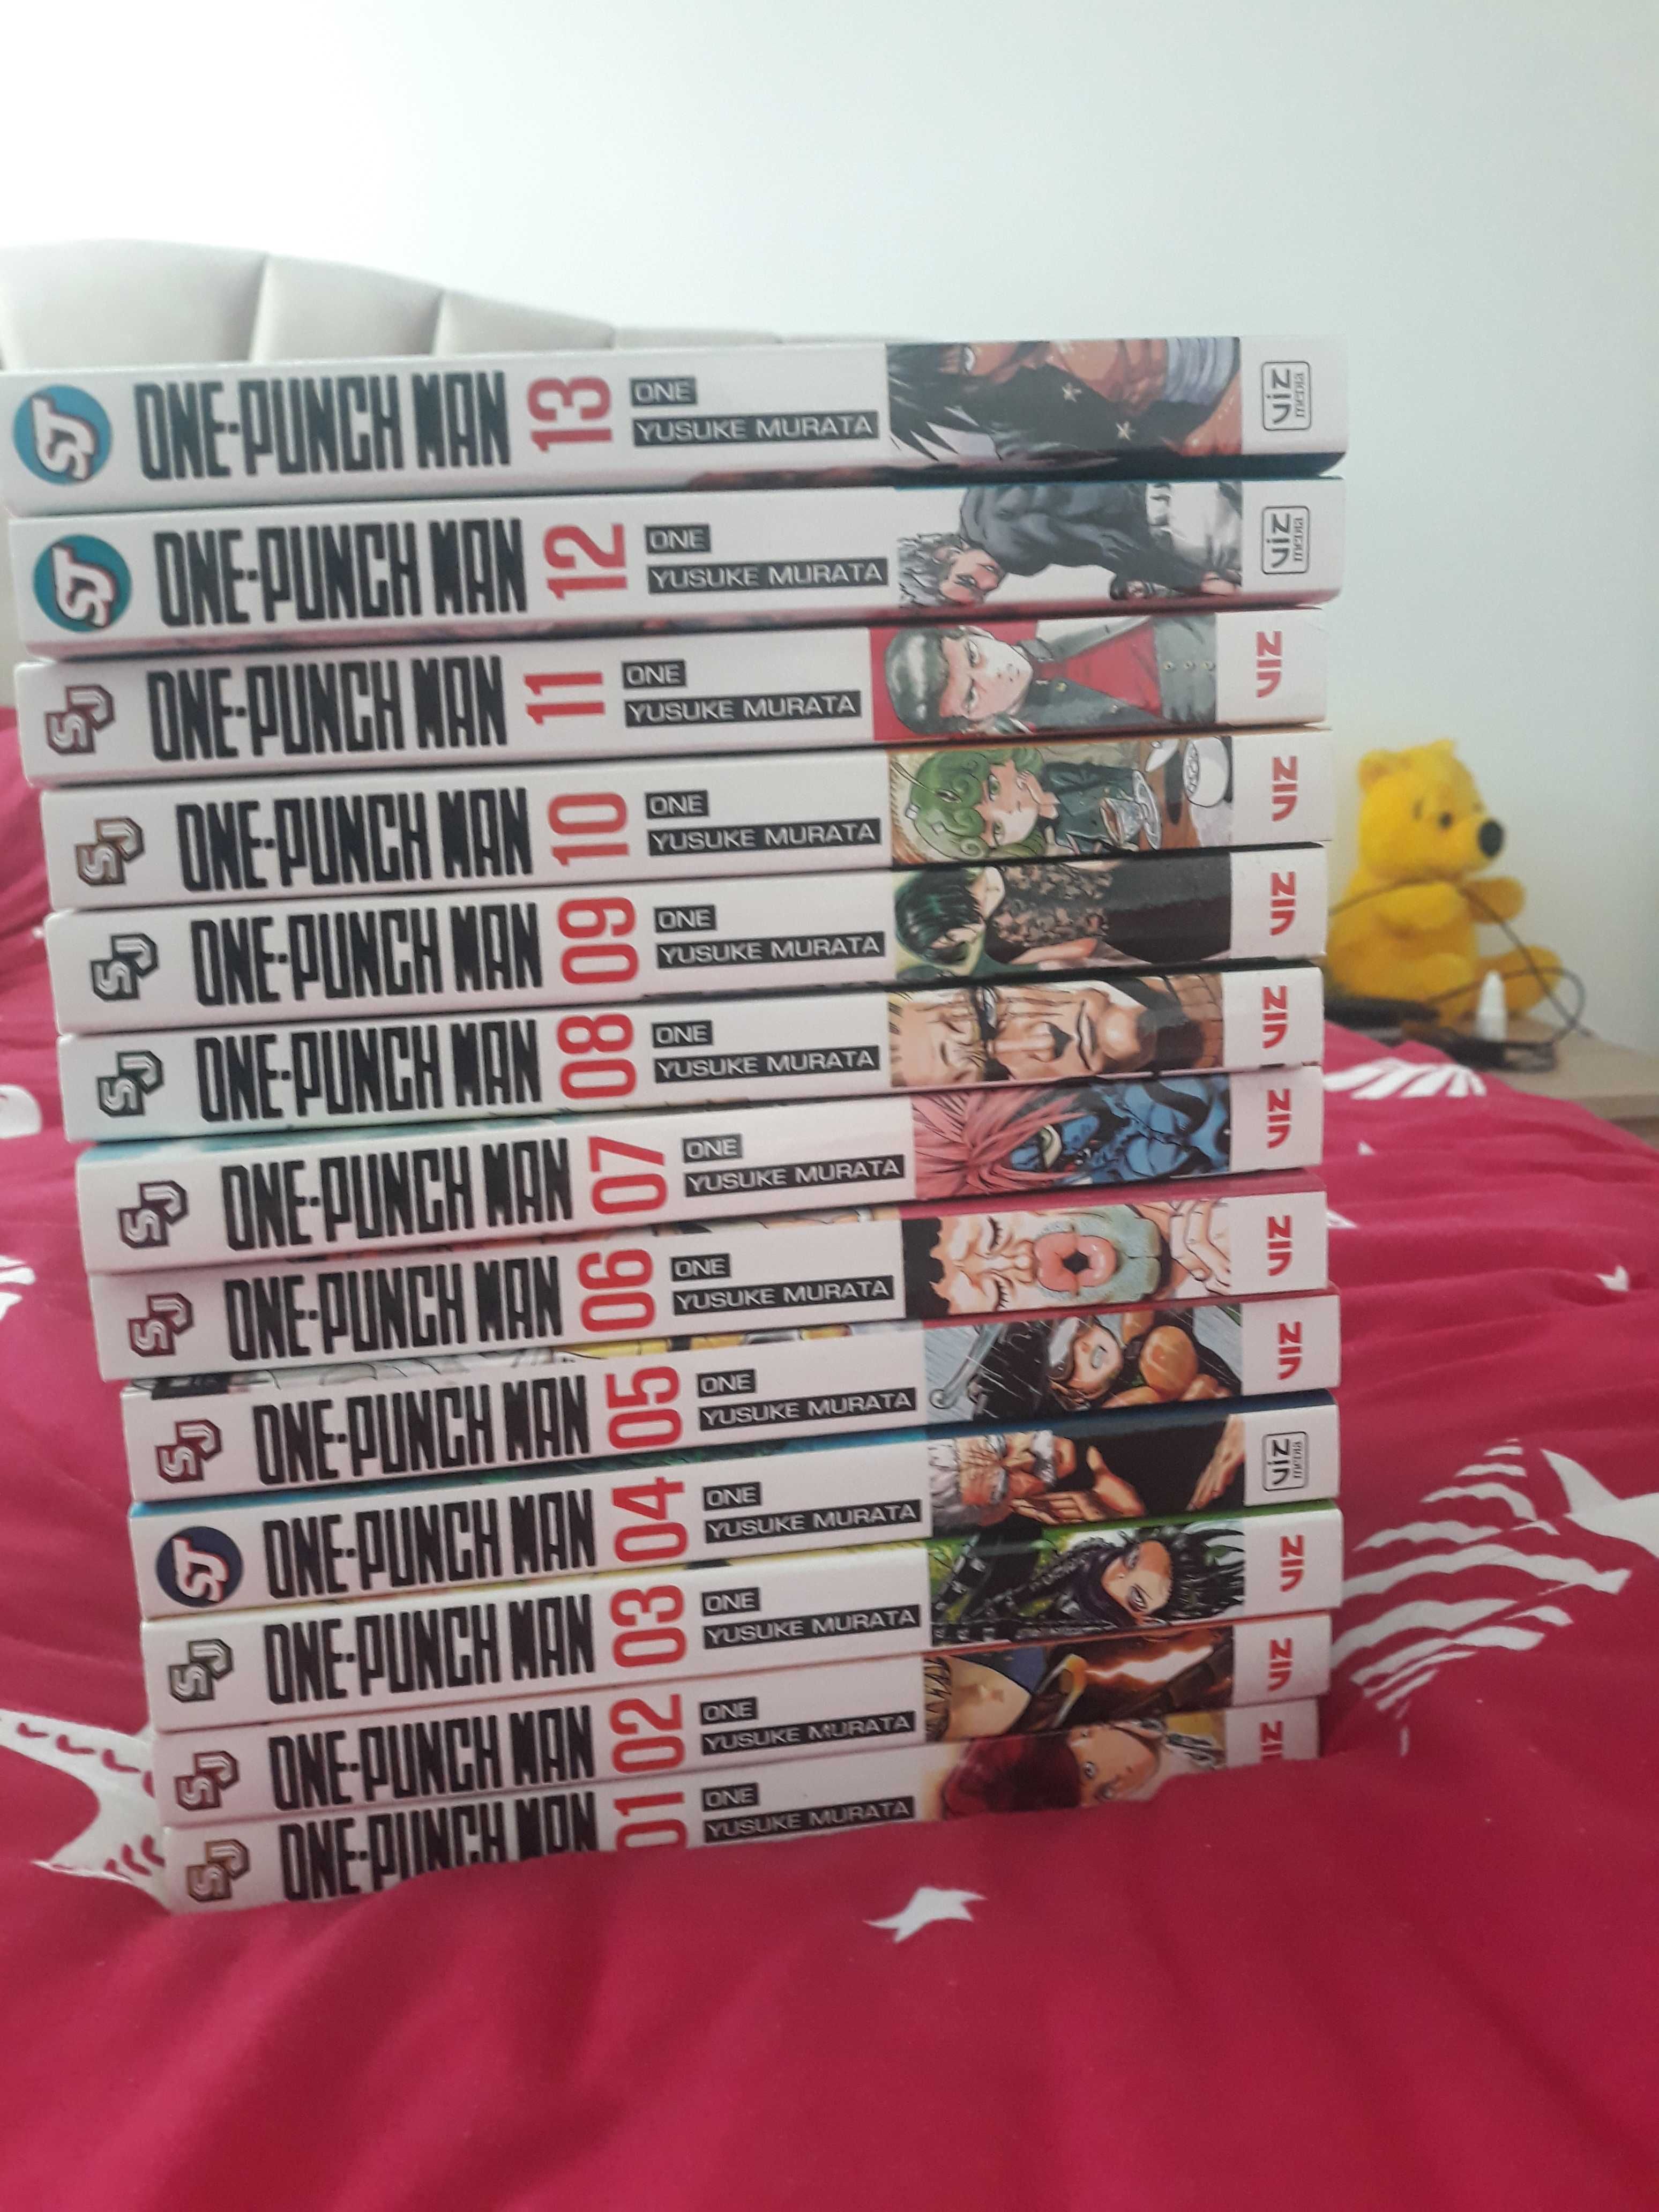 Manga One Punch Man vol 1-13